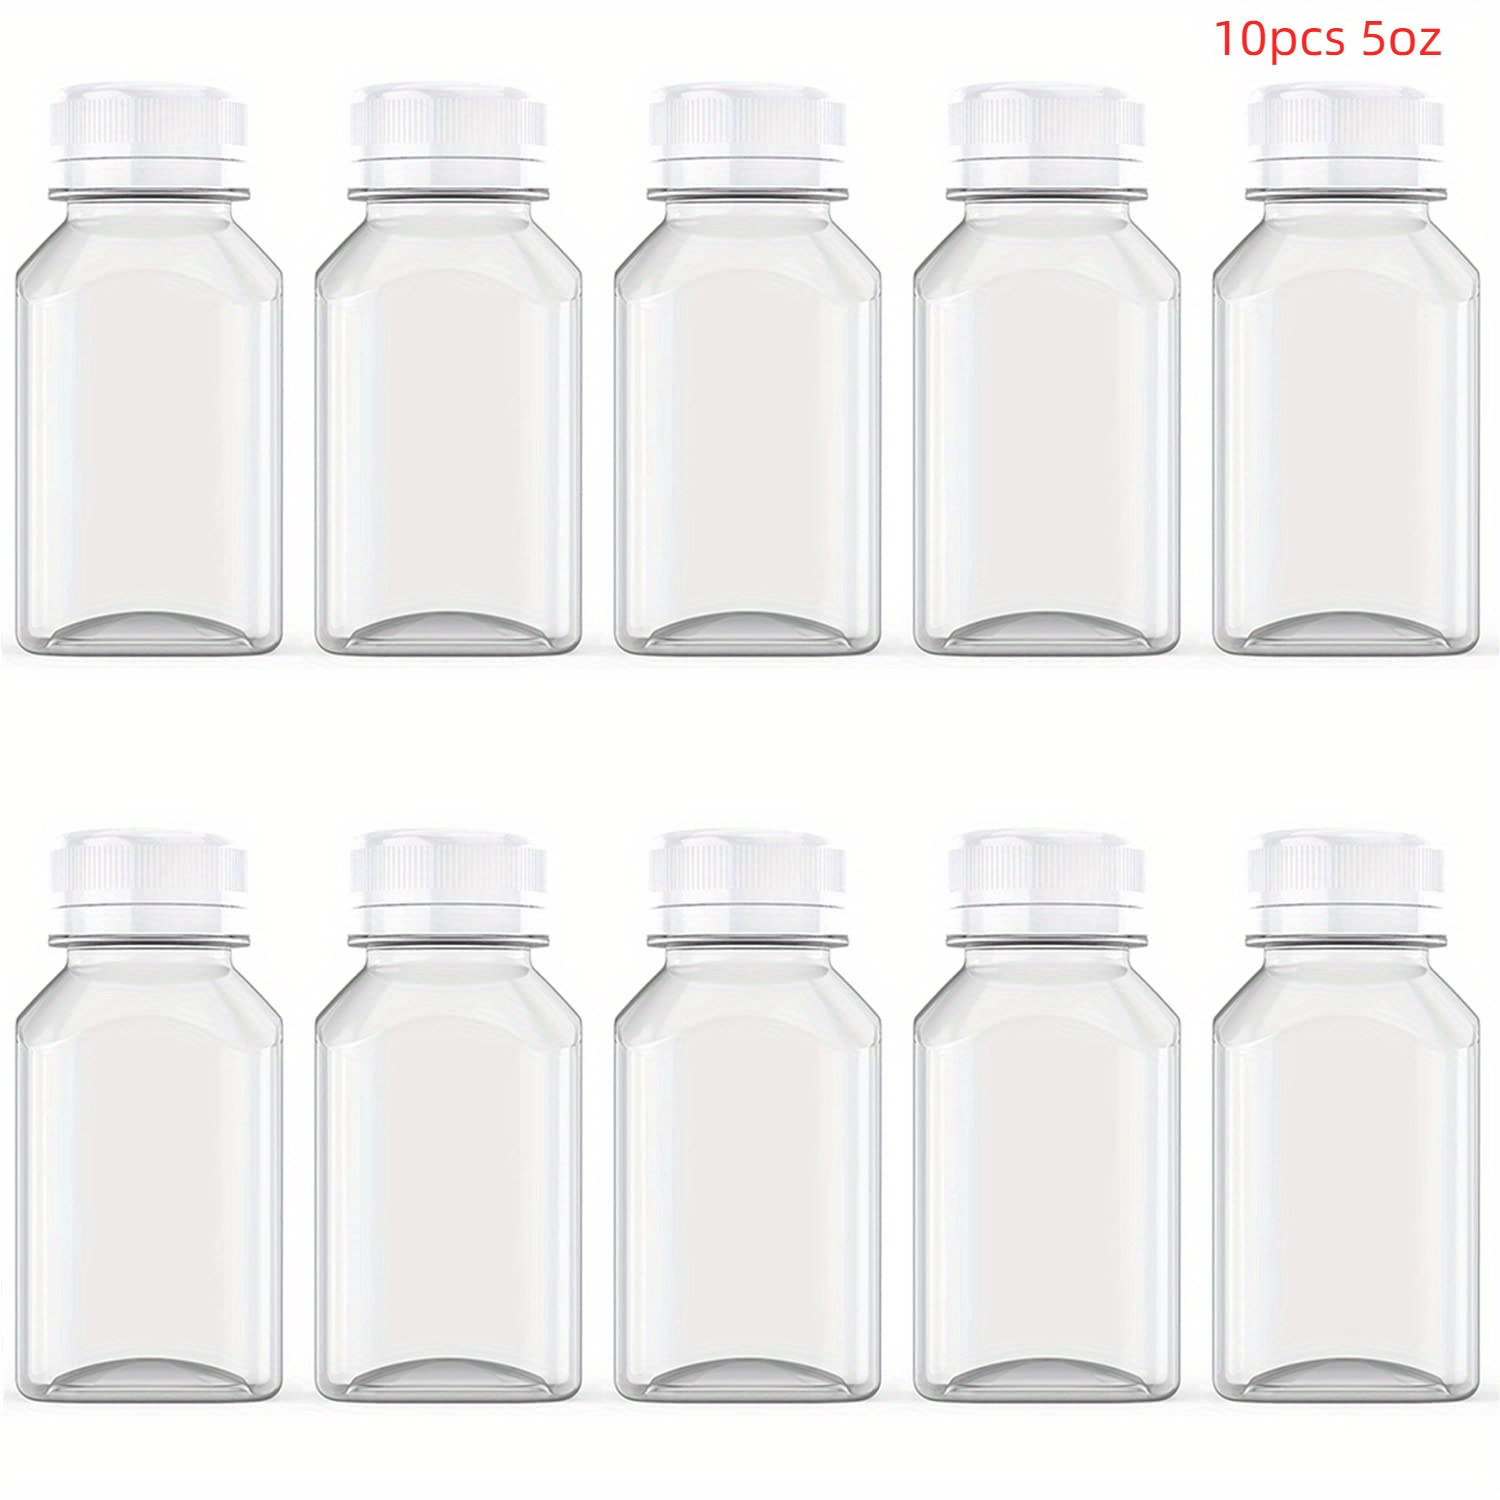 Unomor 20Pcs Drink bottle mini bottles for mini fridge mini fridge  accessories plastic cups juicer bottles with lids plastic bottles reusable  the pet